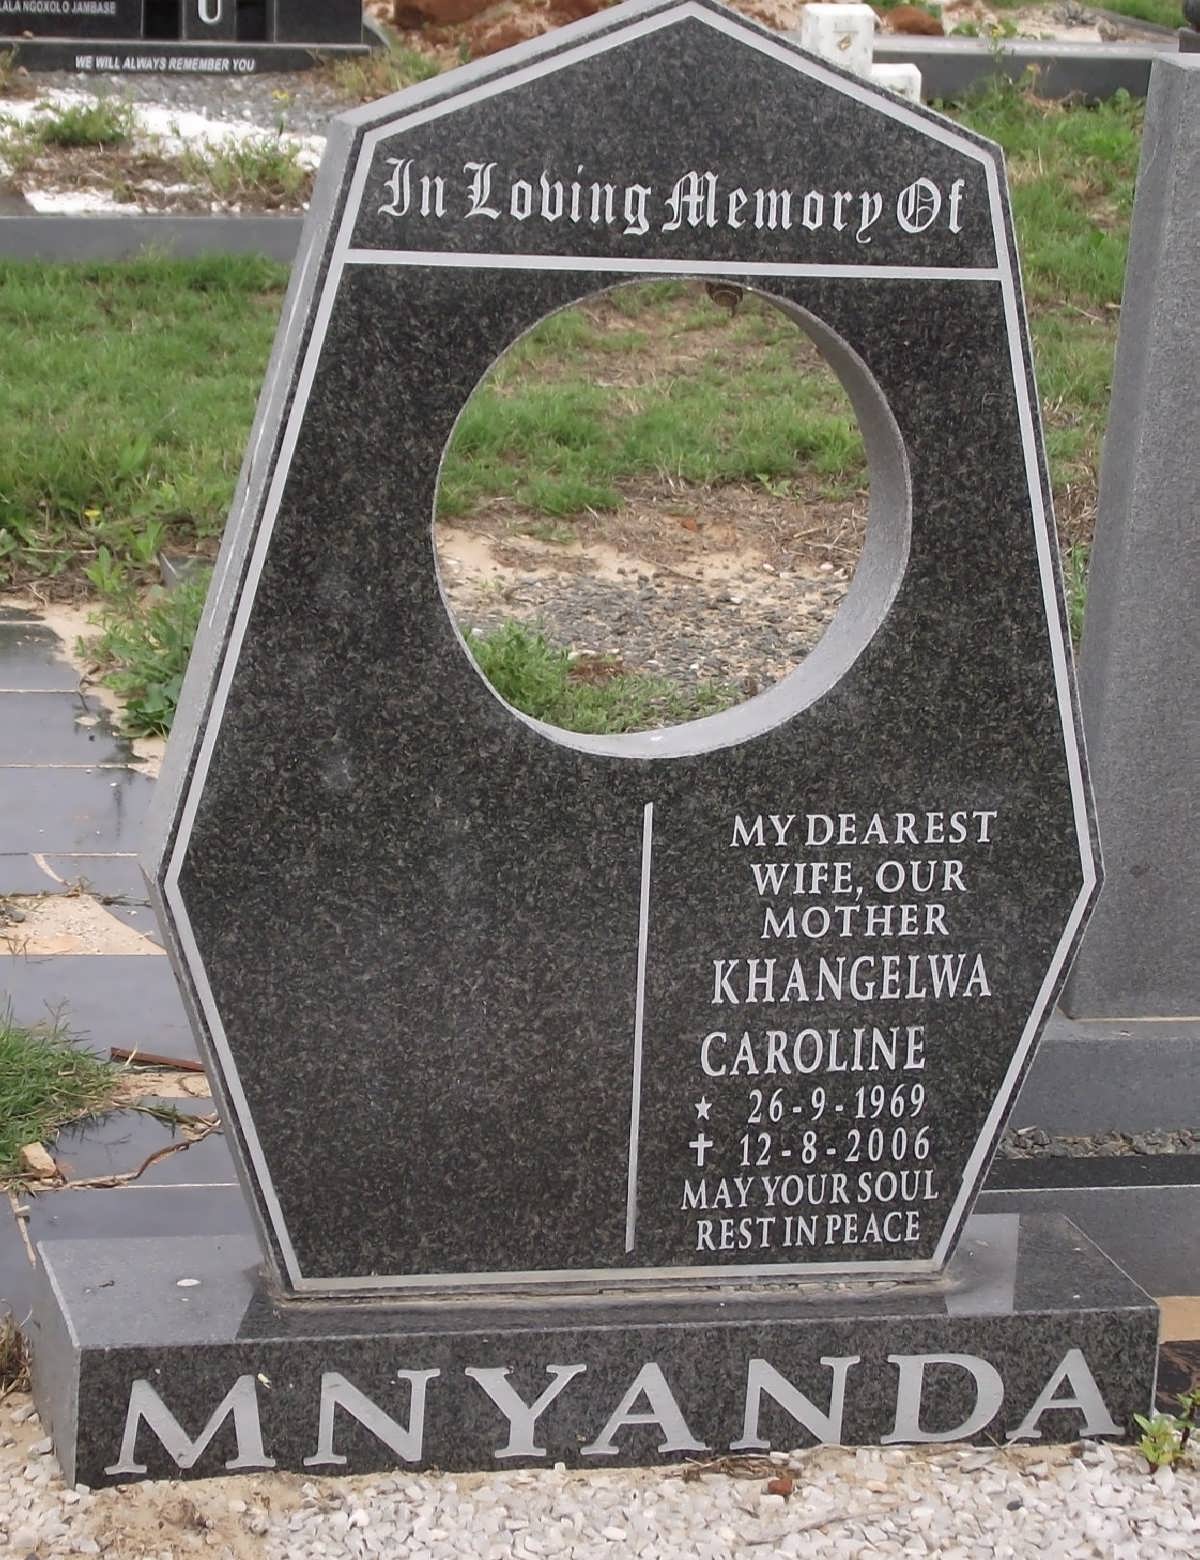 MNYANDA Khangelwa Caroline 1969-2006